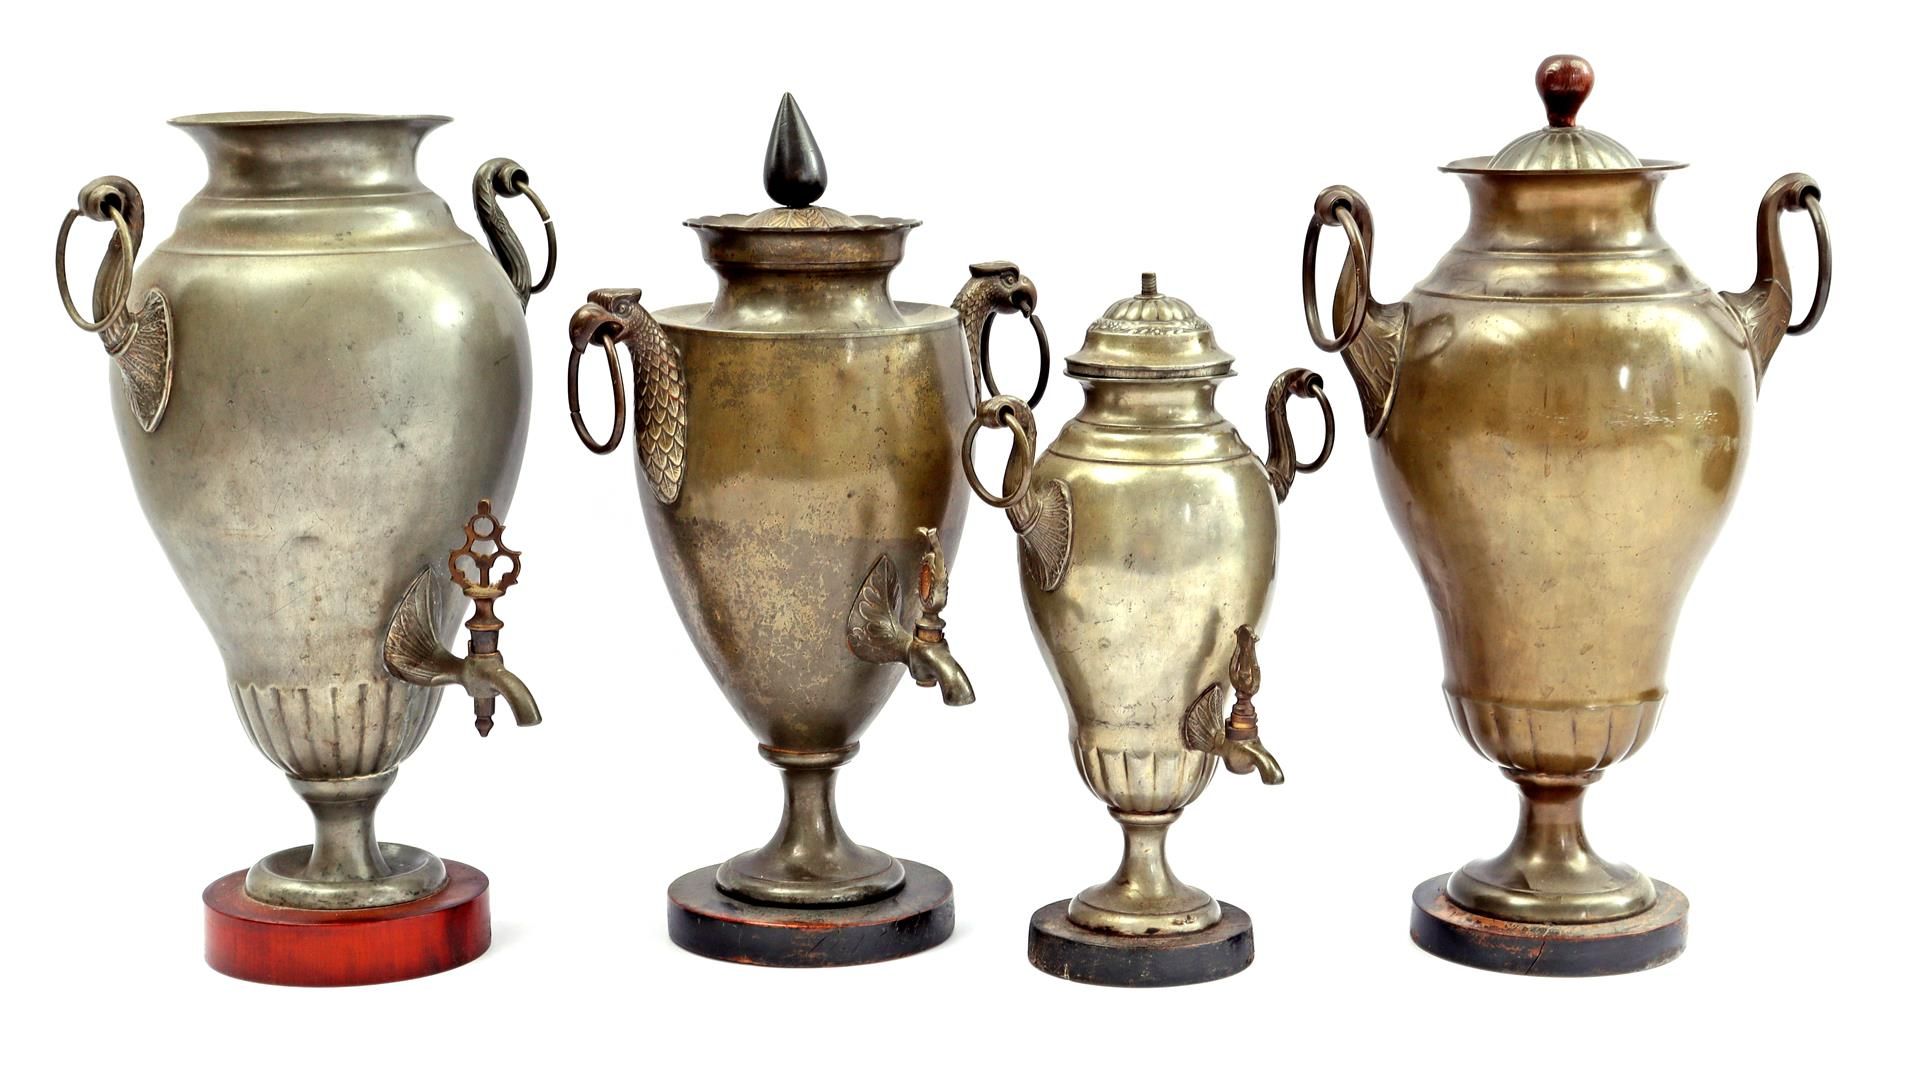 4 antique tin tap jugs 36-42 cm high (1 lid missing